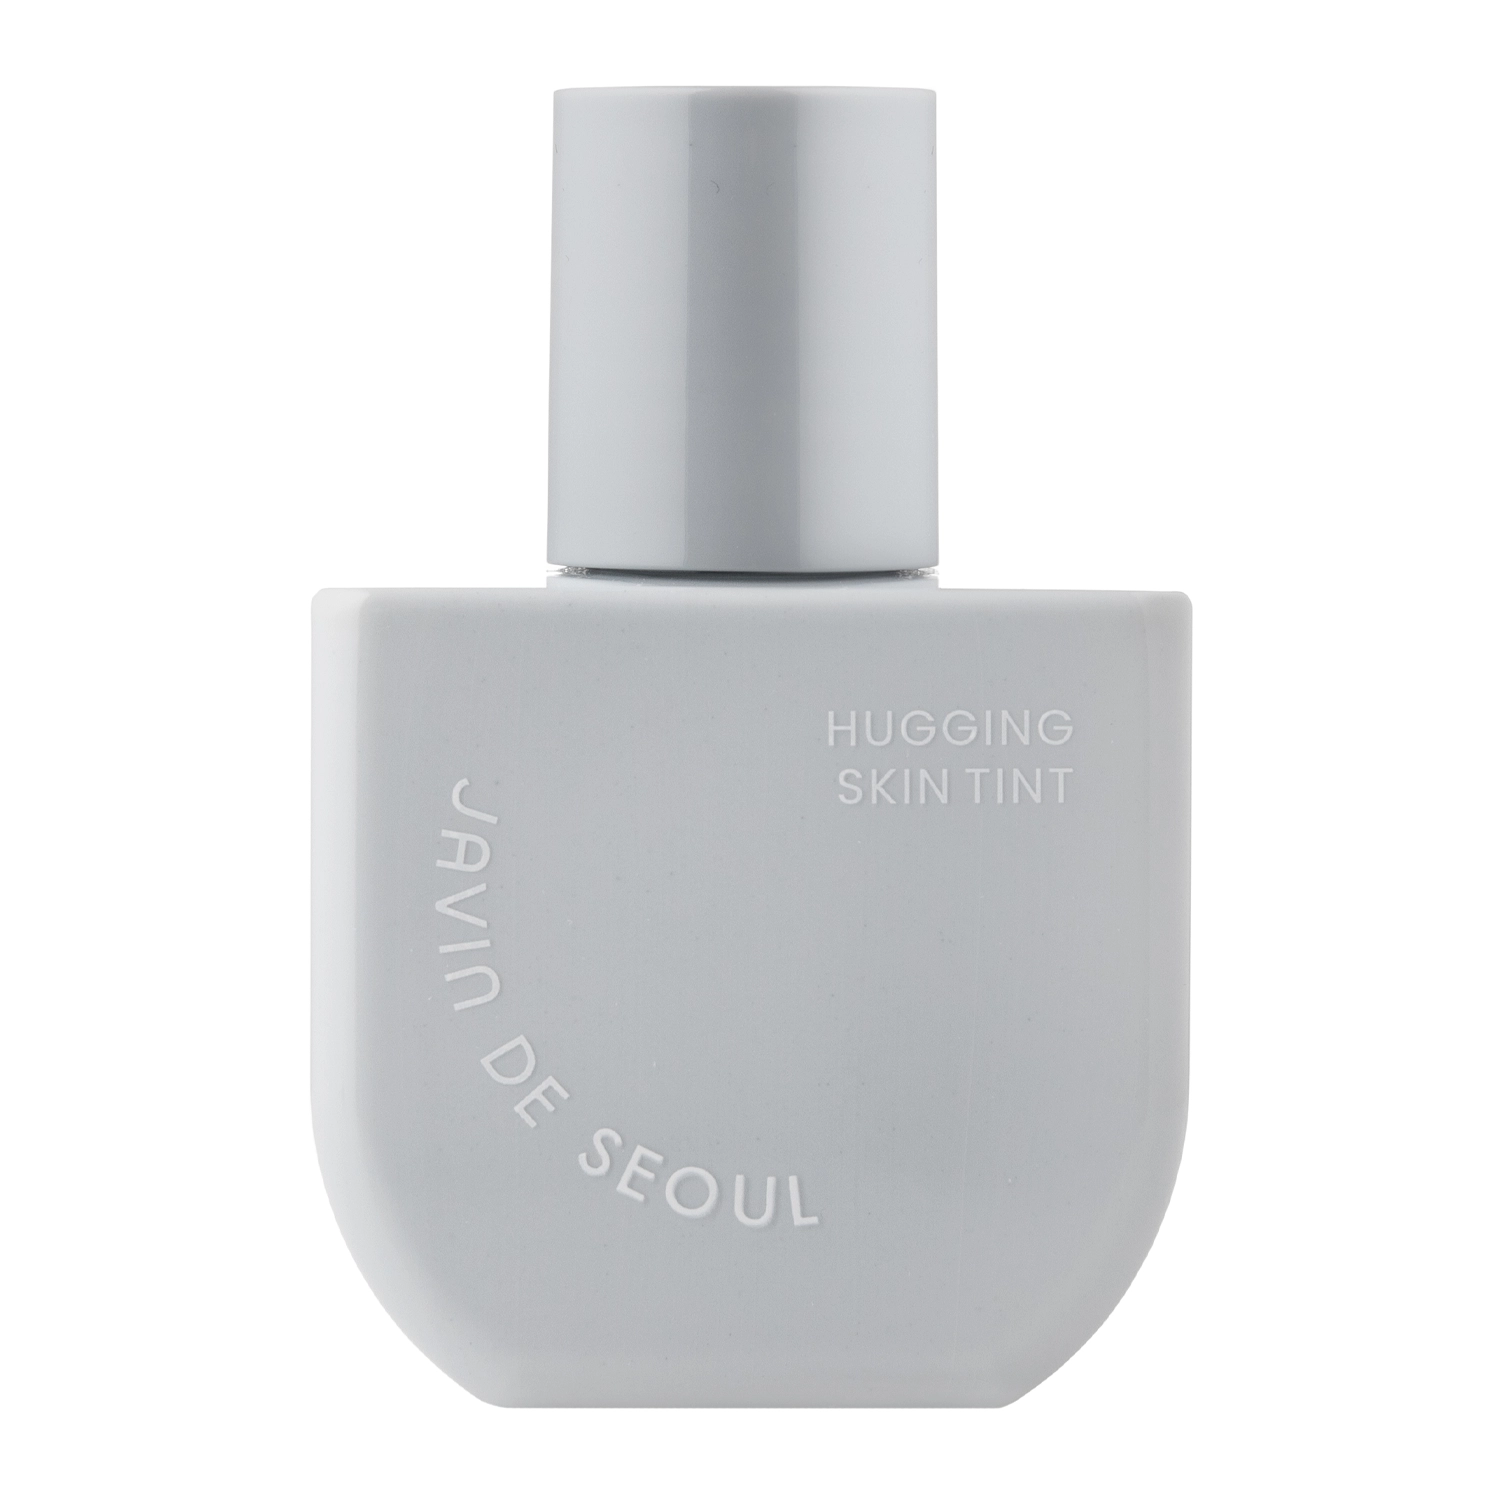 Javin De Seoul - Hugging Skin Tint - Hidratáló Alapozó - 01 Airy Bloom - 55g